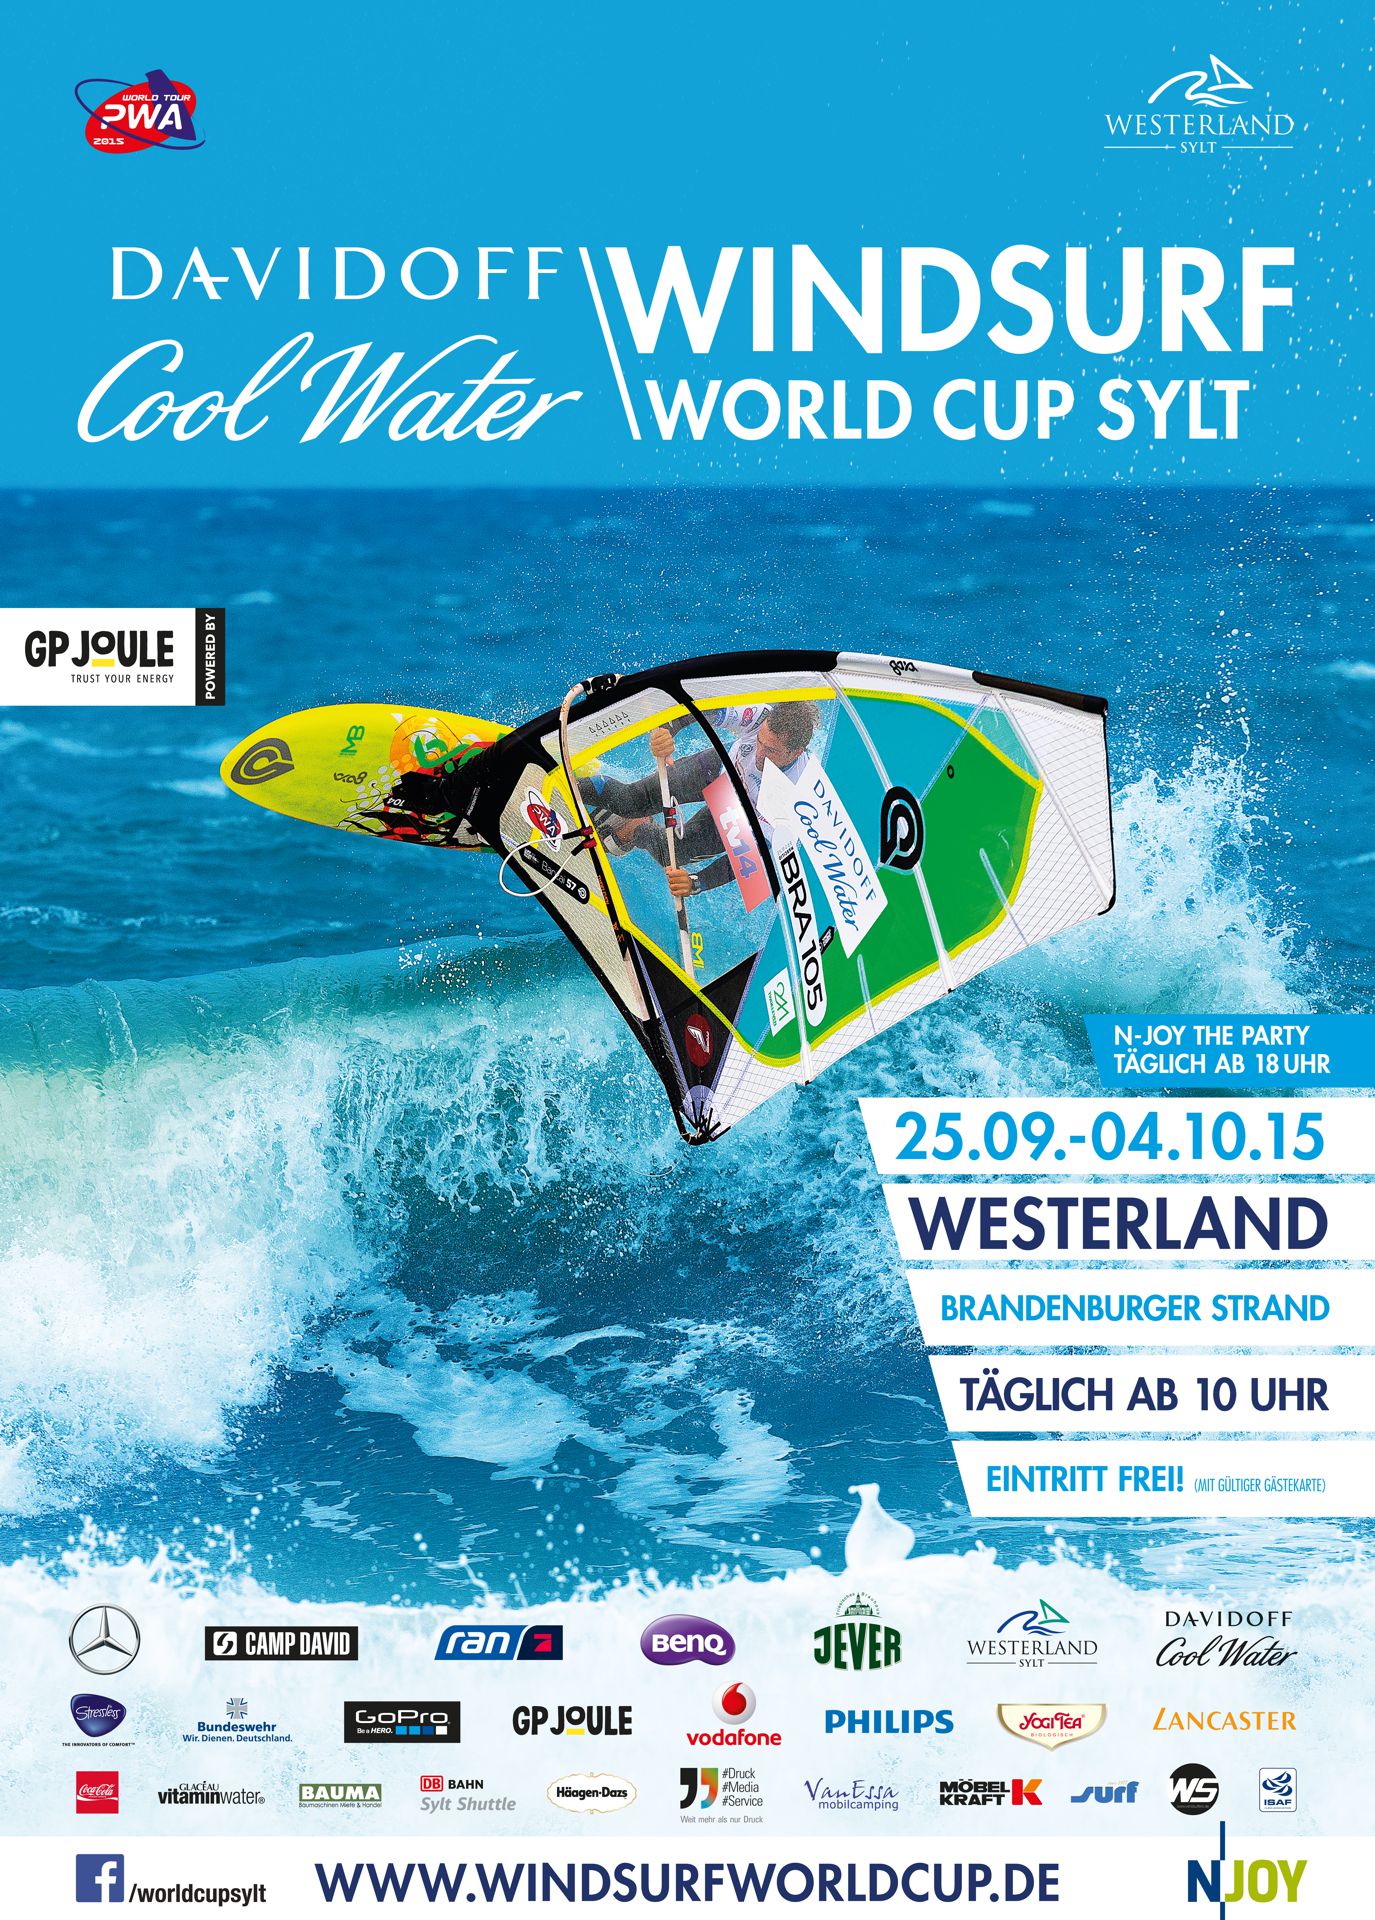 DAVIDOFF Cool Water World Cup Sylt